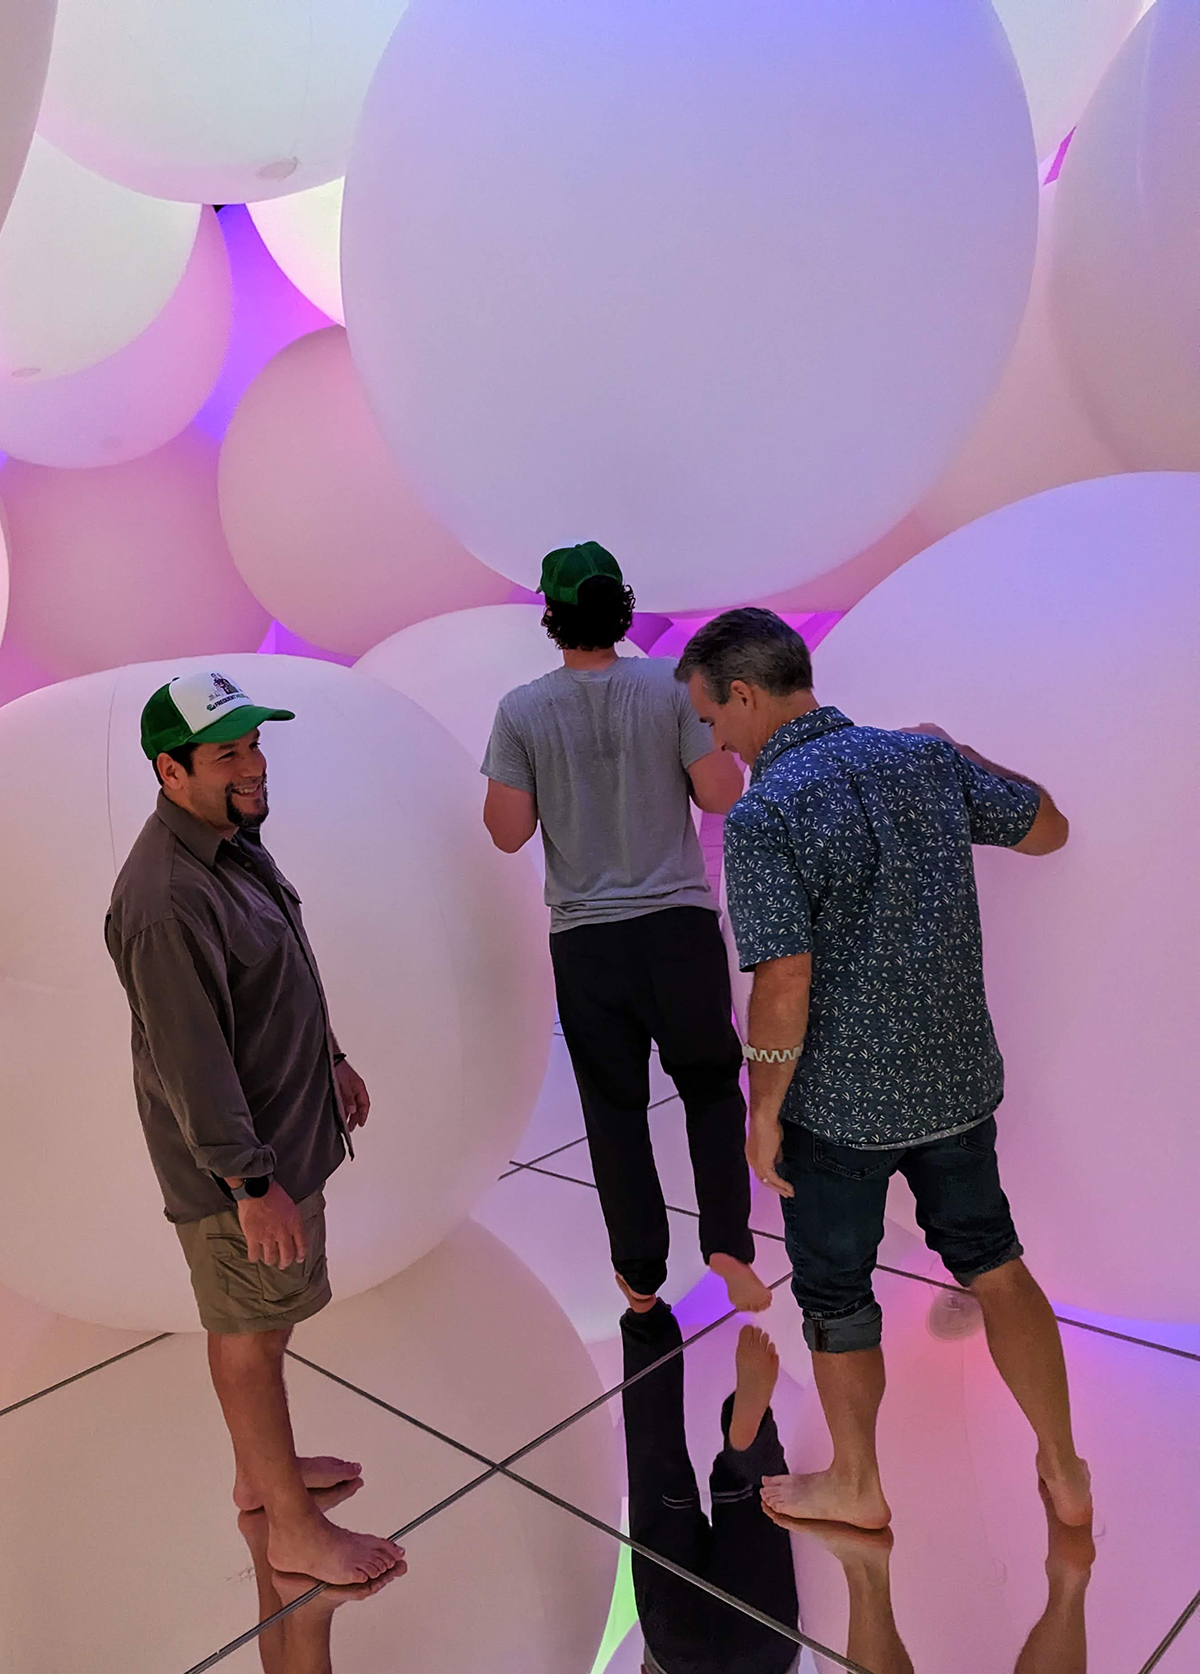 Giant bouncy ball room teamlabs planets